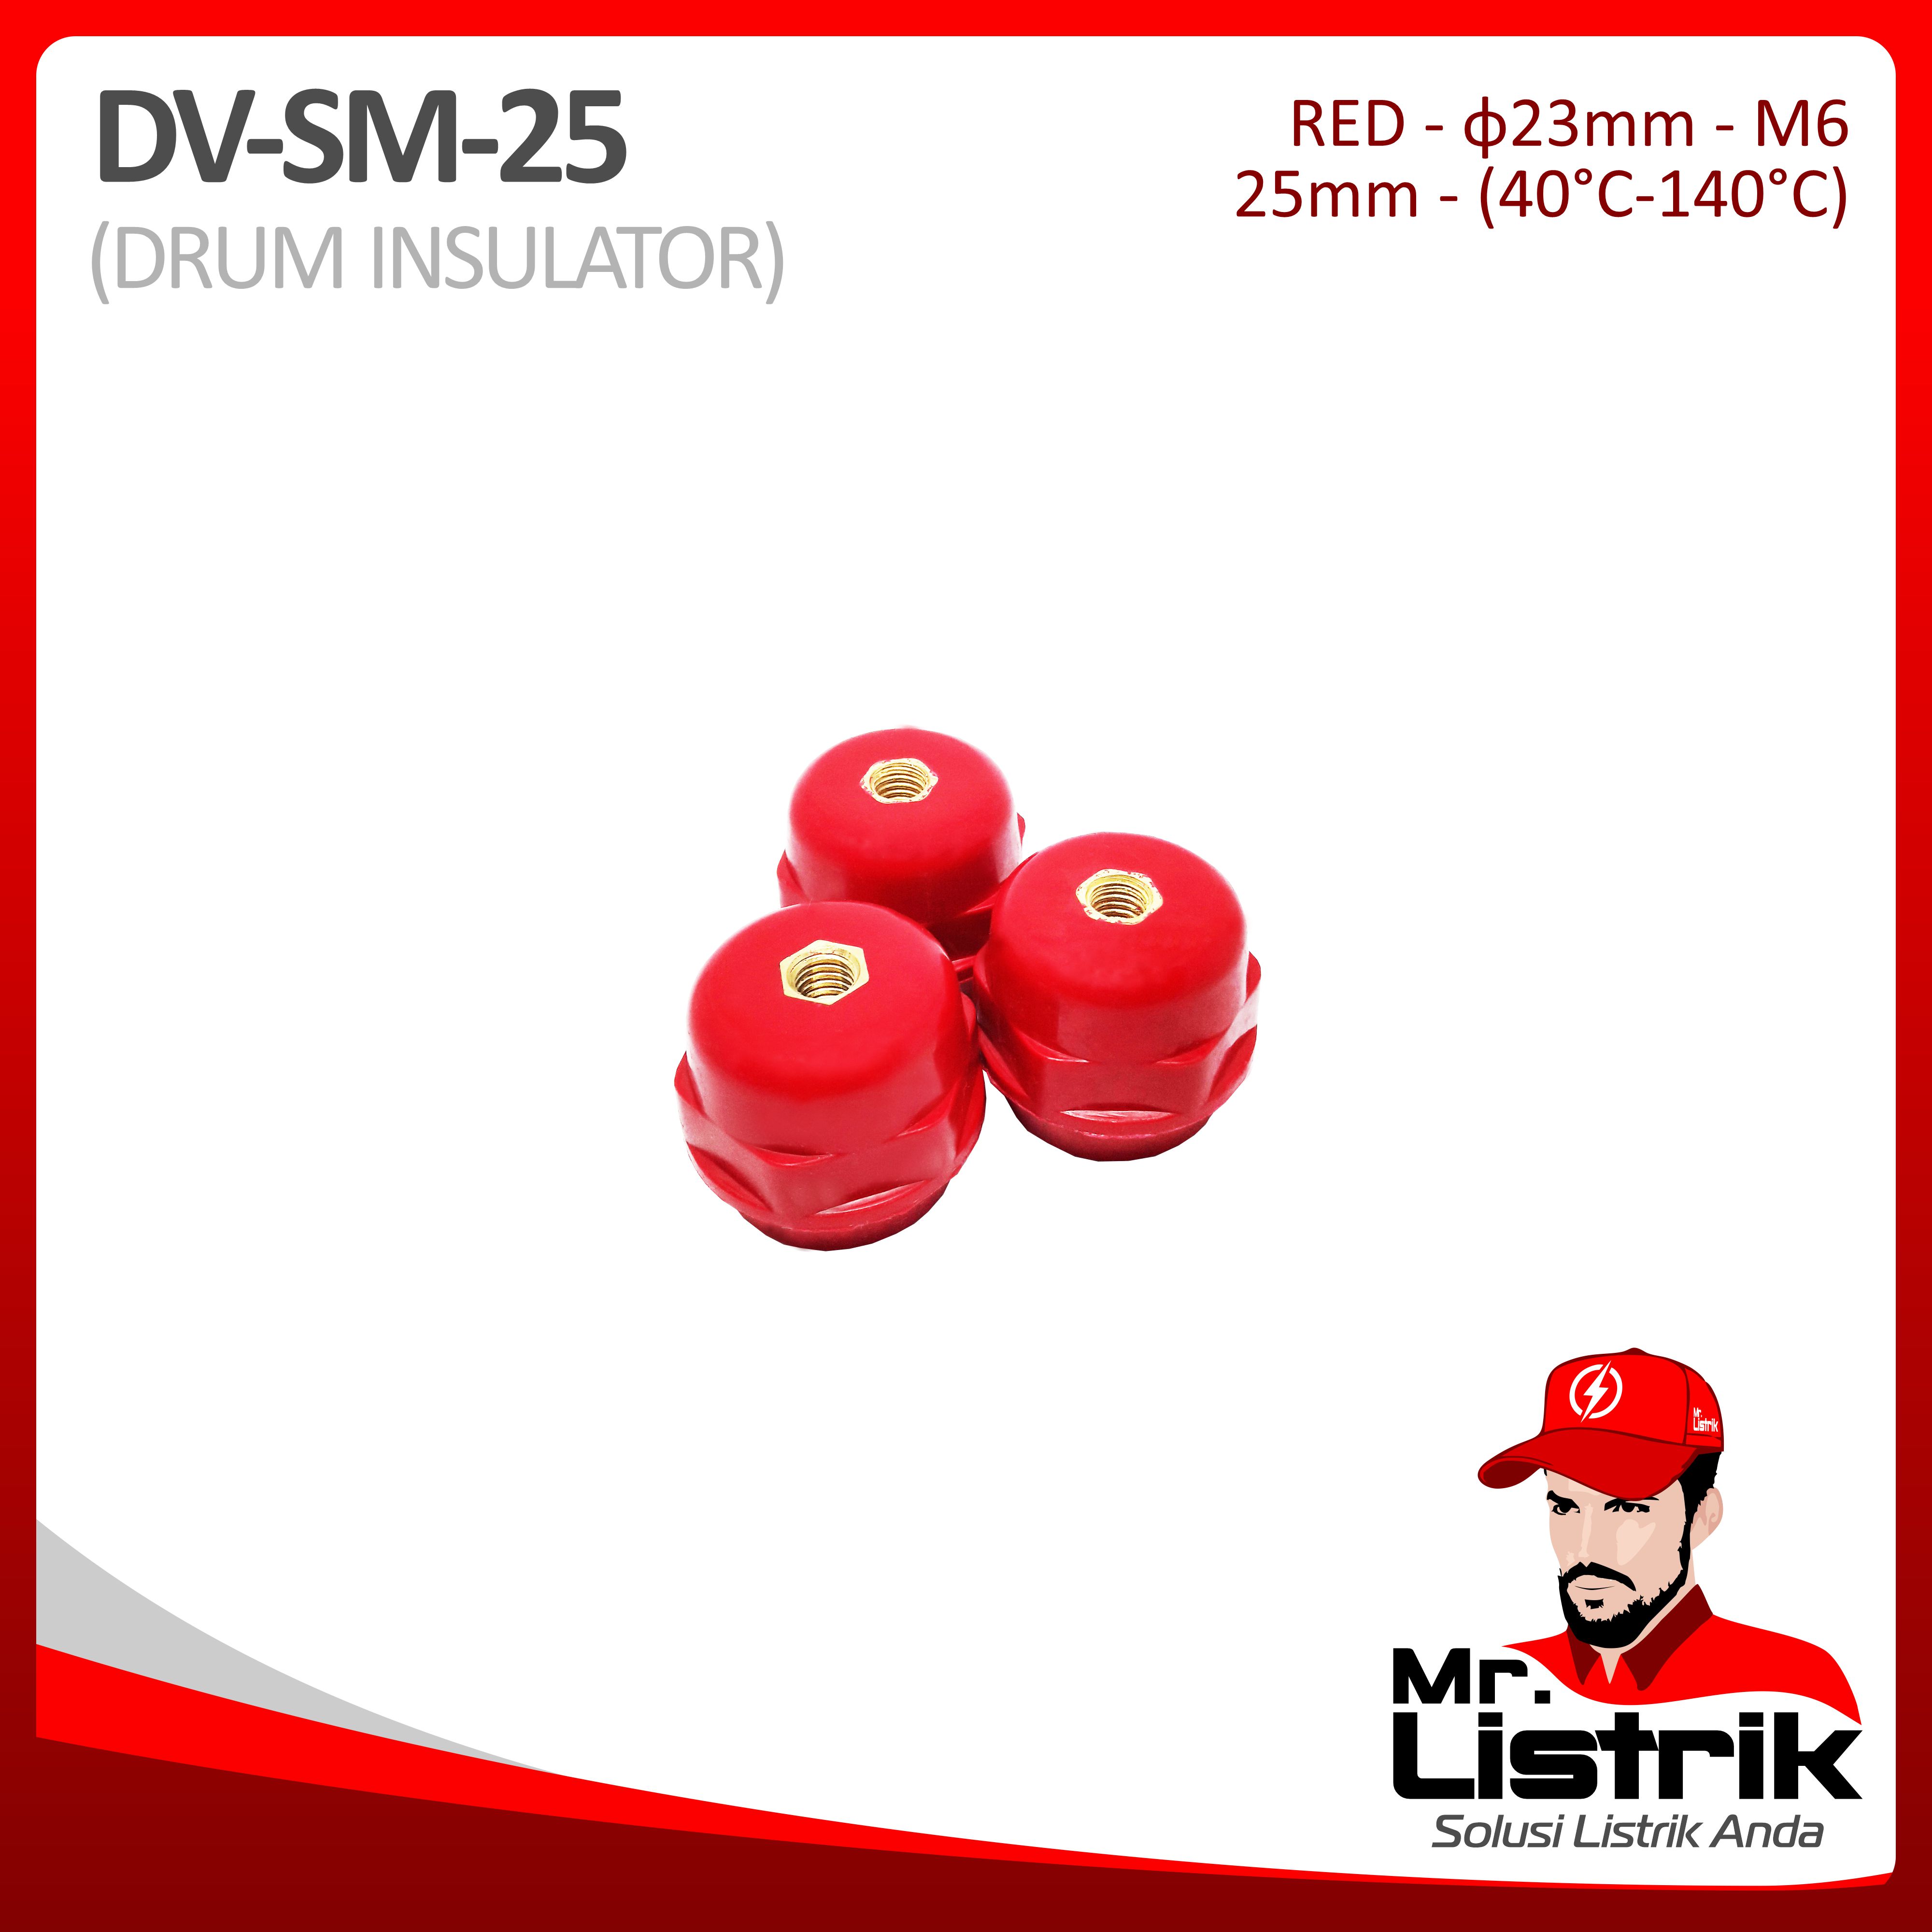 Drum Insulator Rekolit DV SM-25